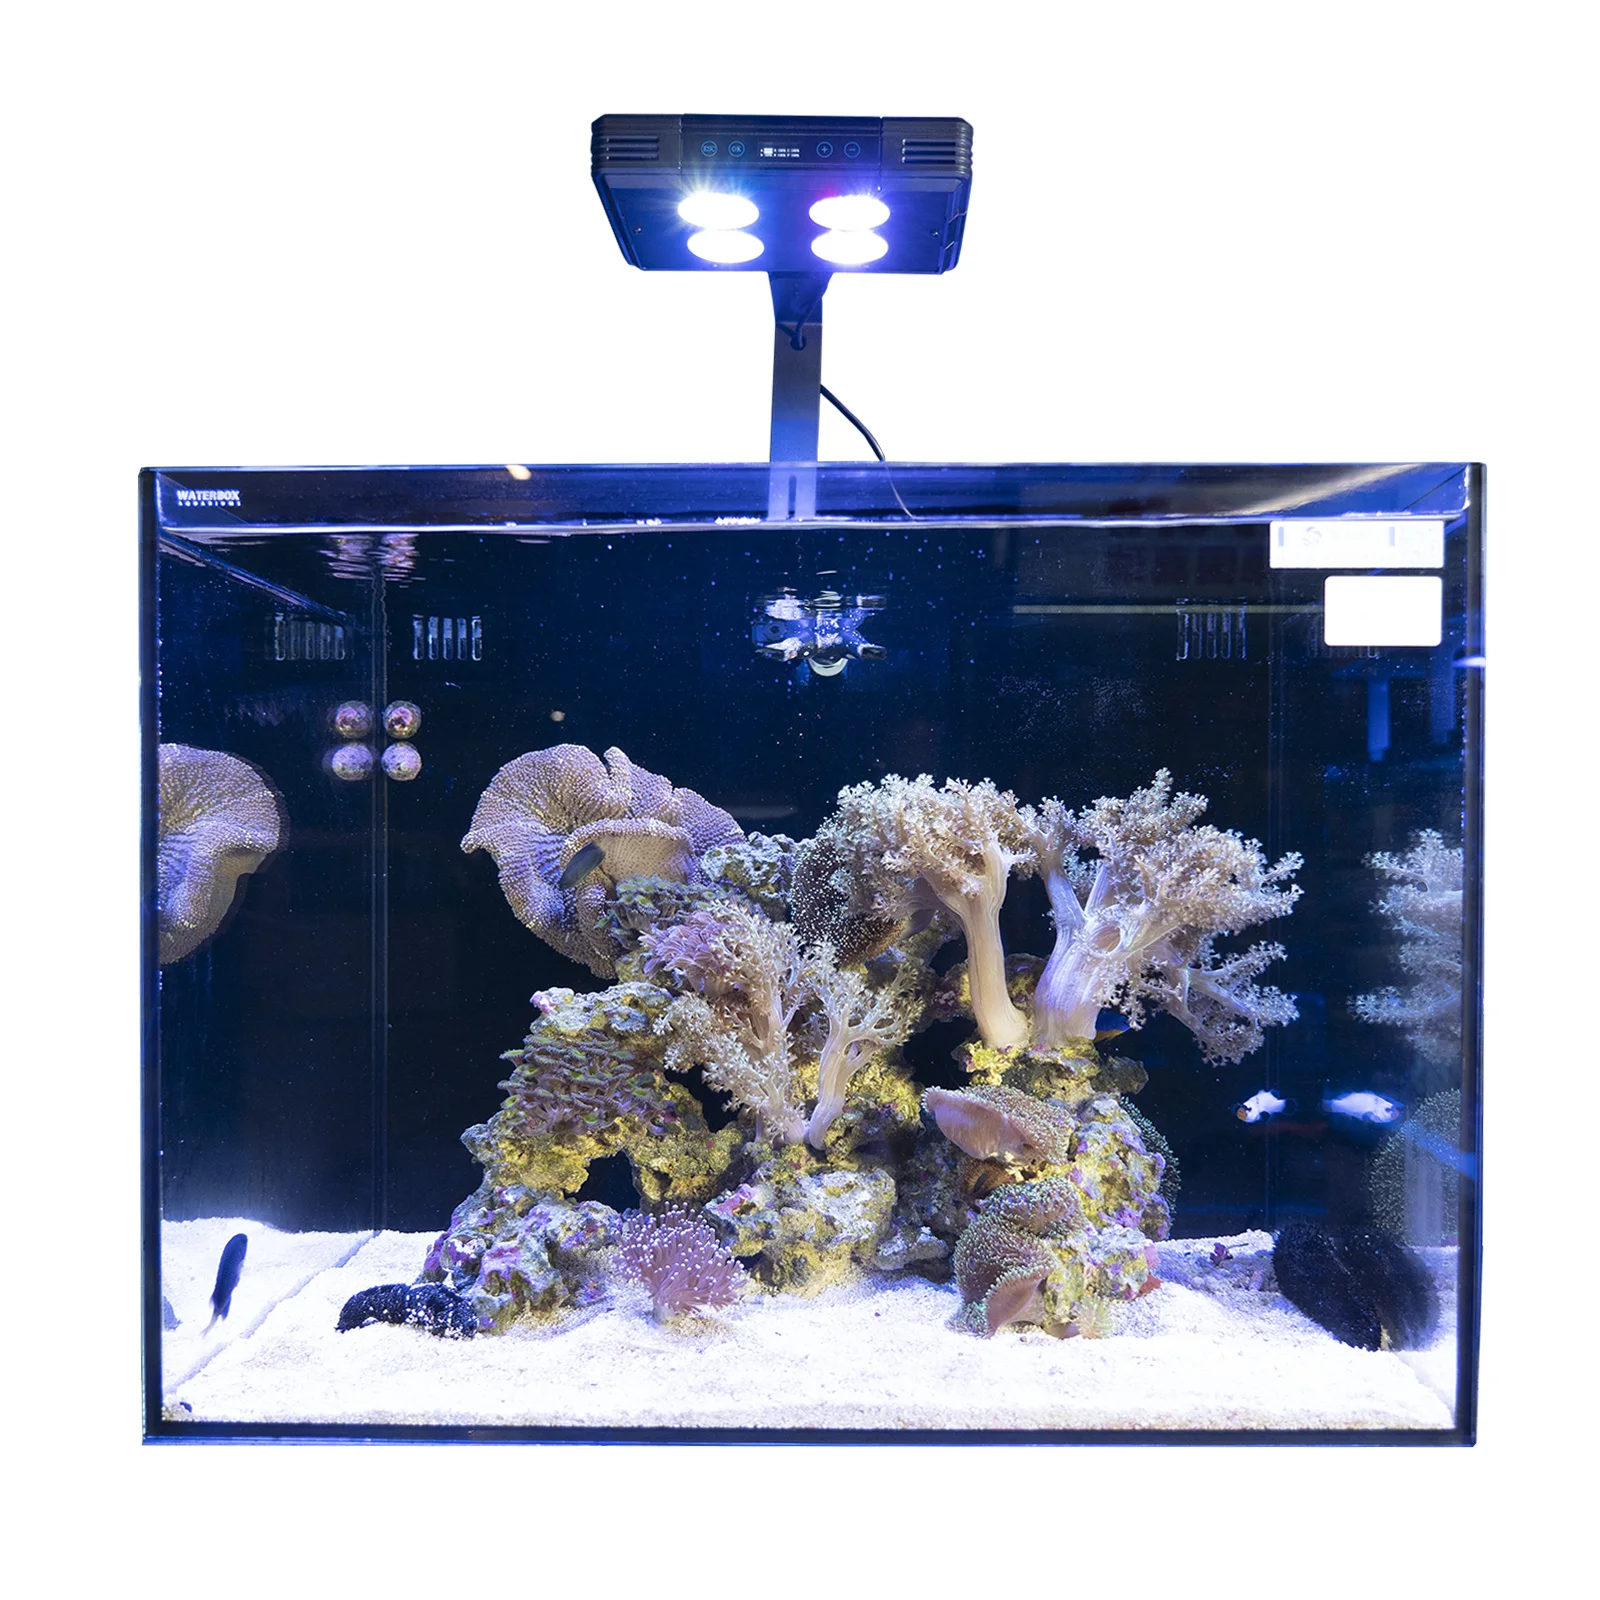 Raybow upgraded aquarium lights 52W Full Spectrum LED Lights Saltwater Aquarium lighting lamp for Reef Growth